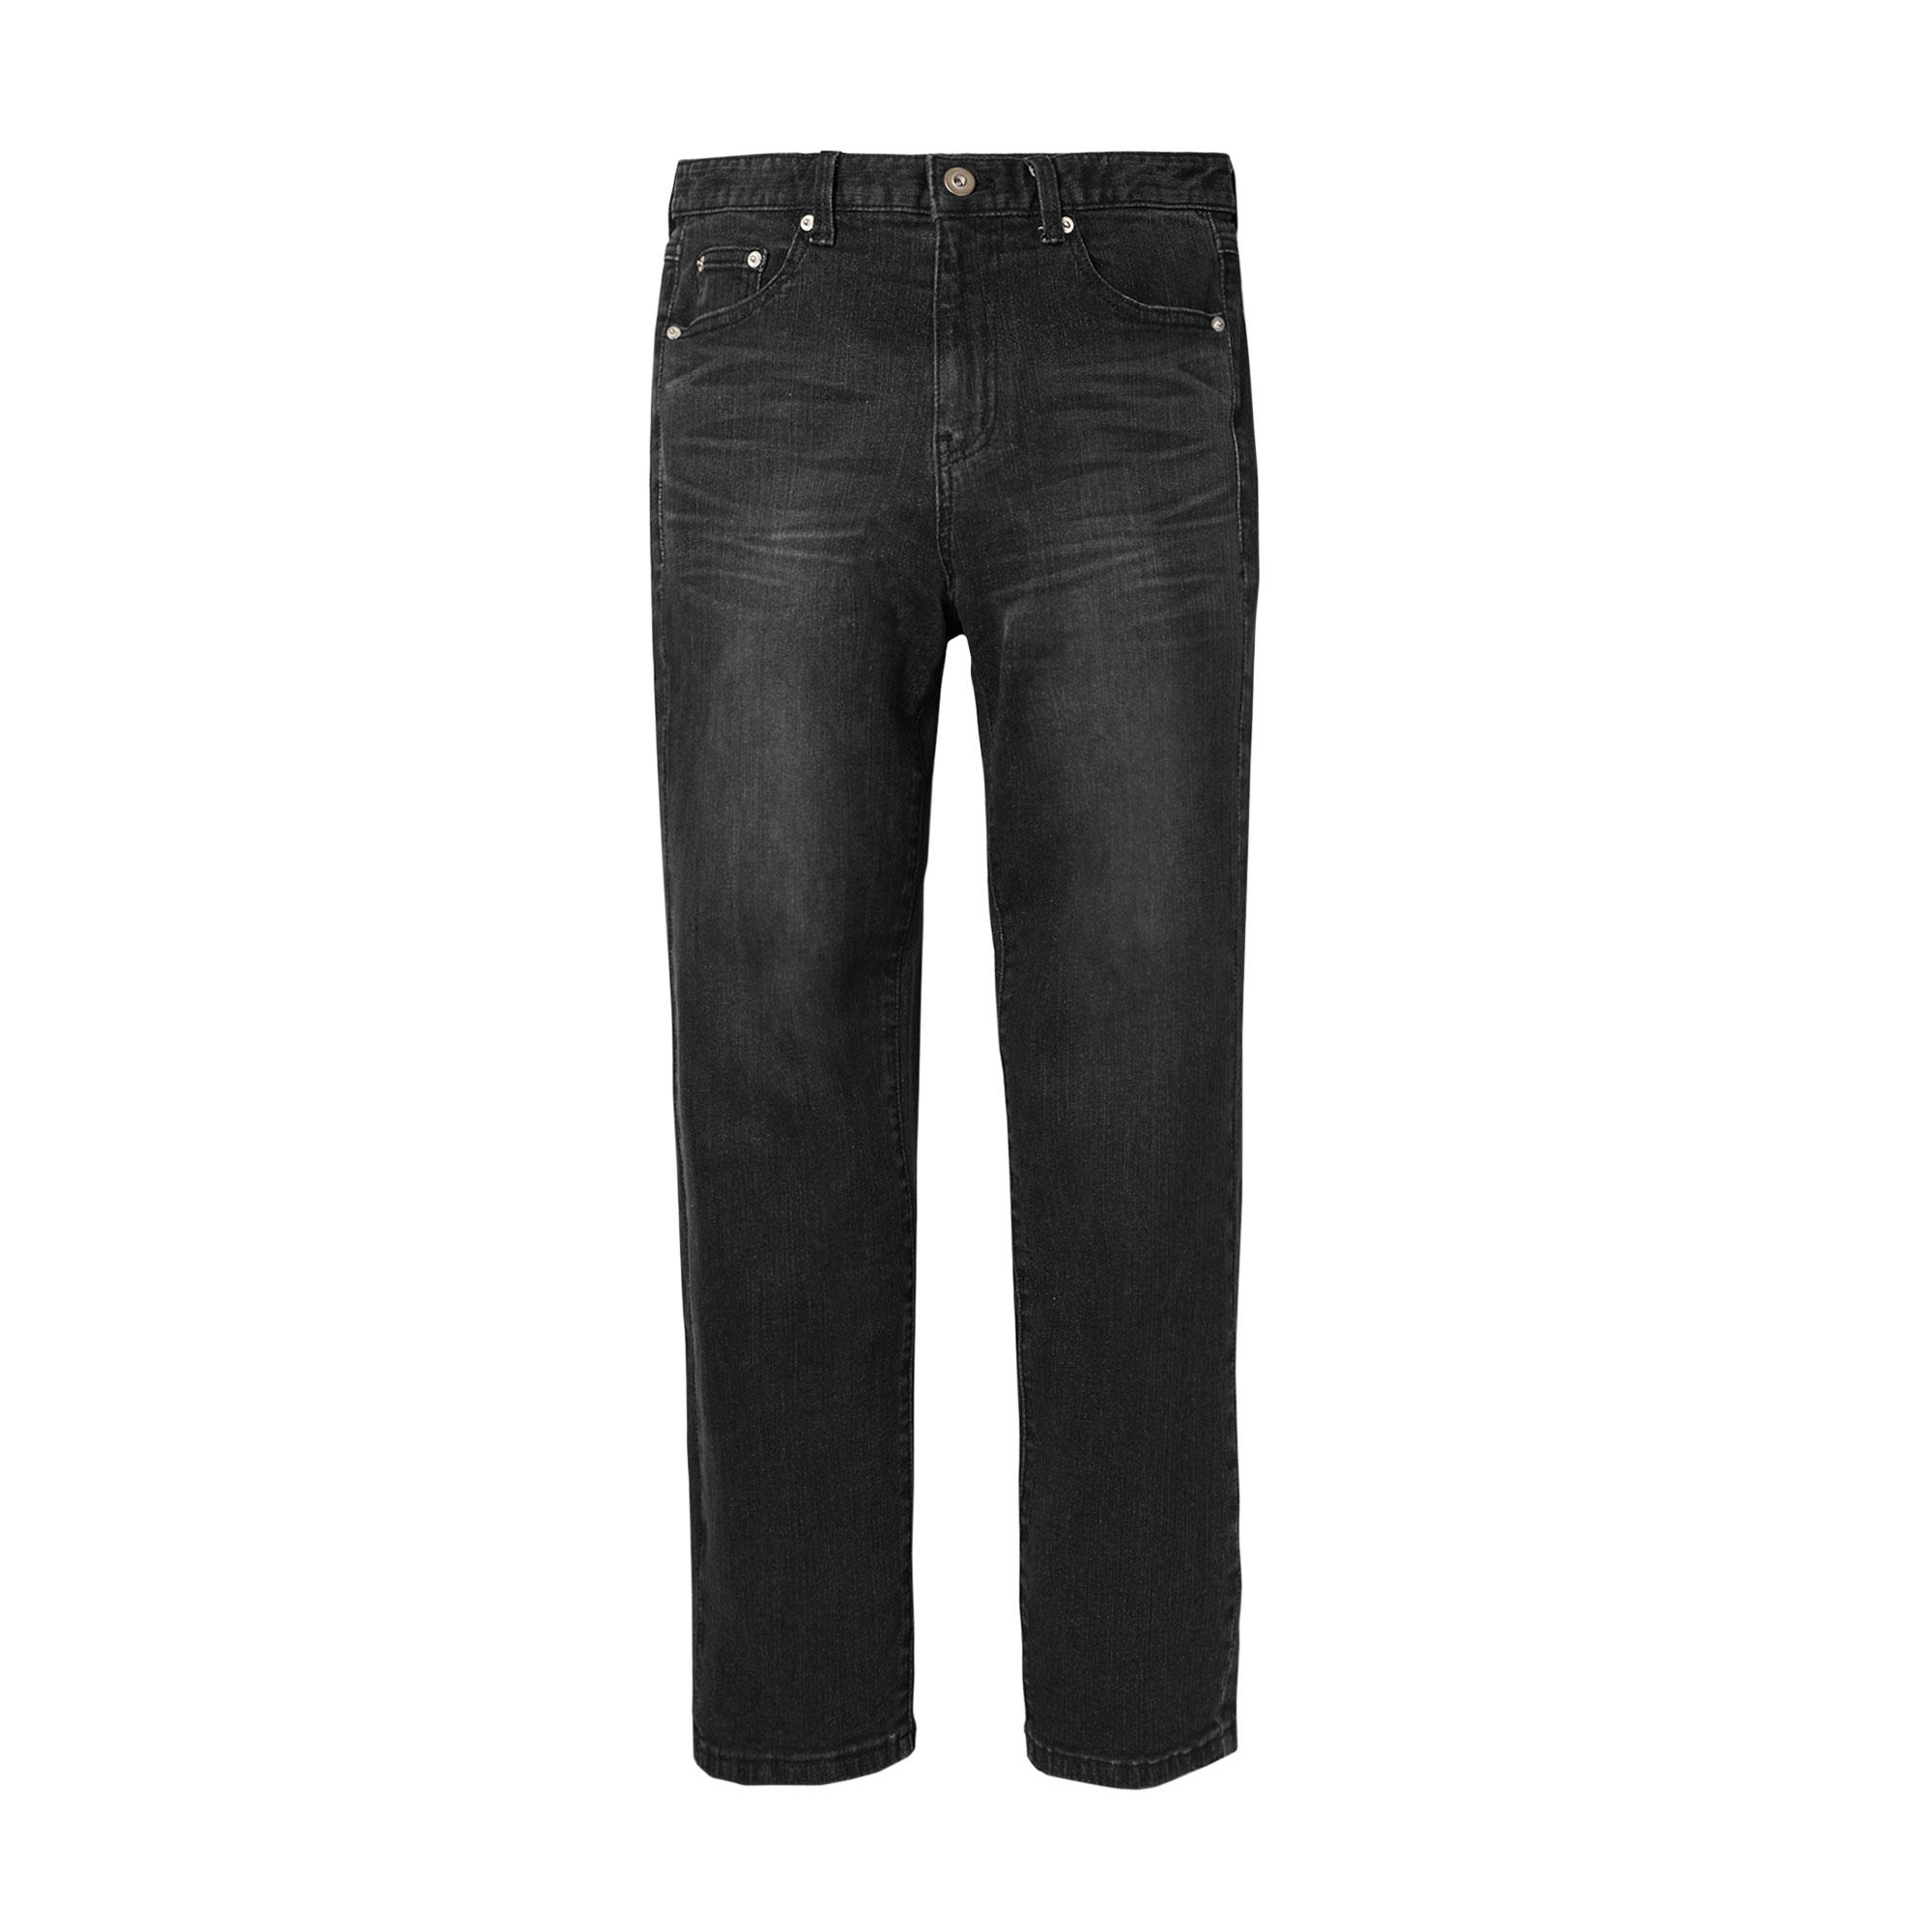 comfort slim jeans / black